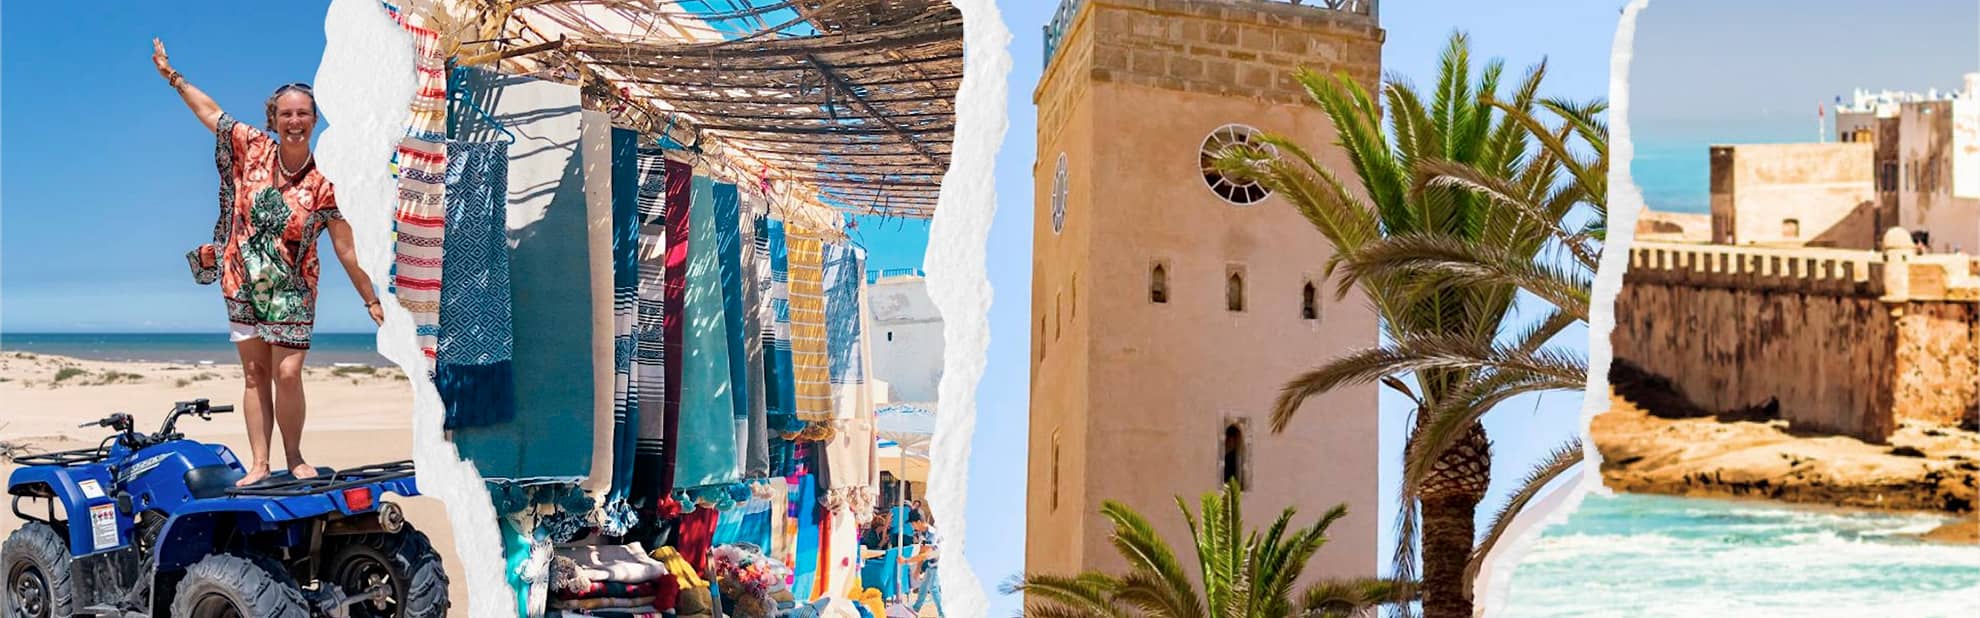 laeti-event-sejours-au-maroc-essaouira